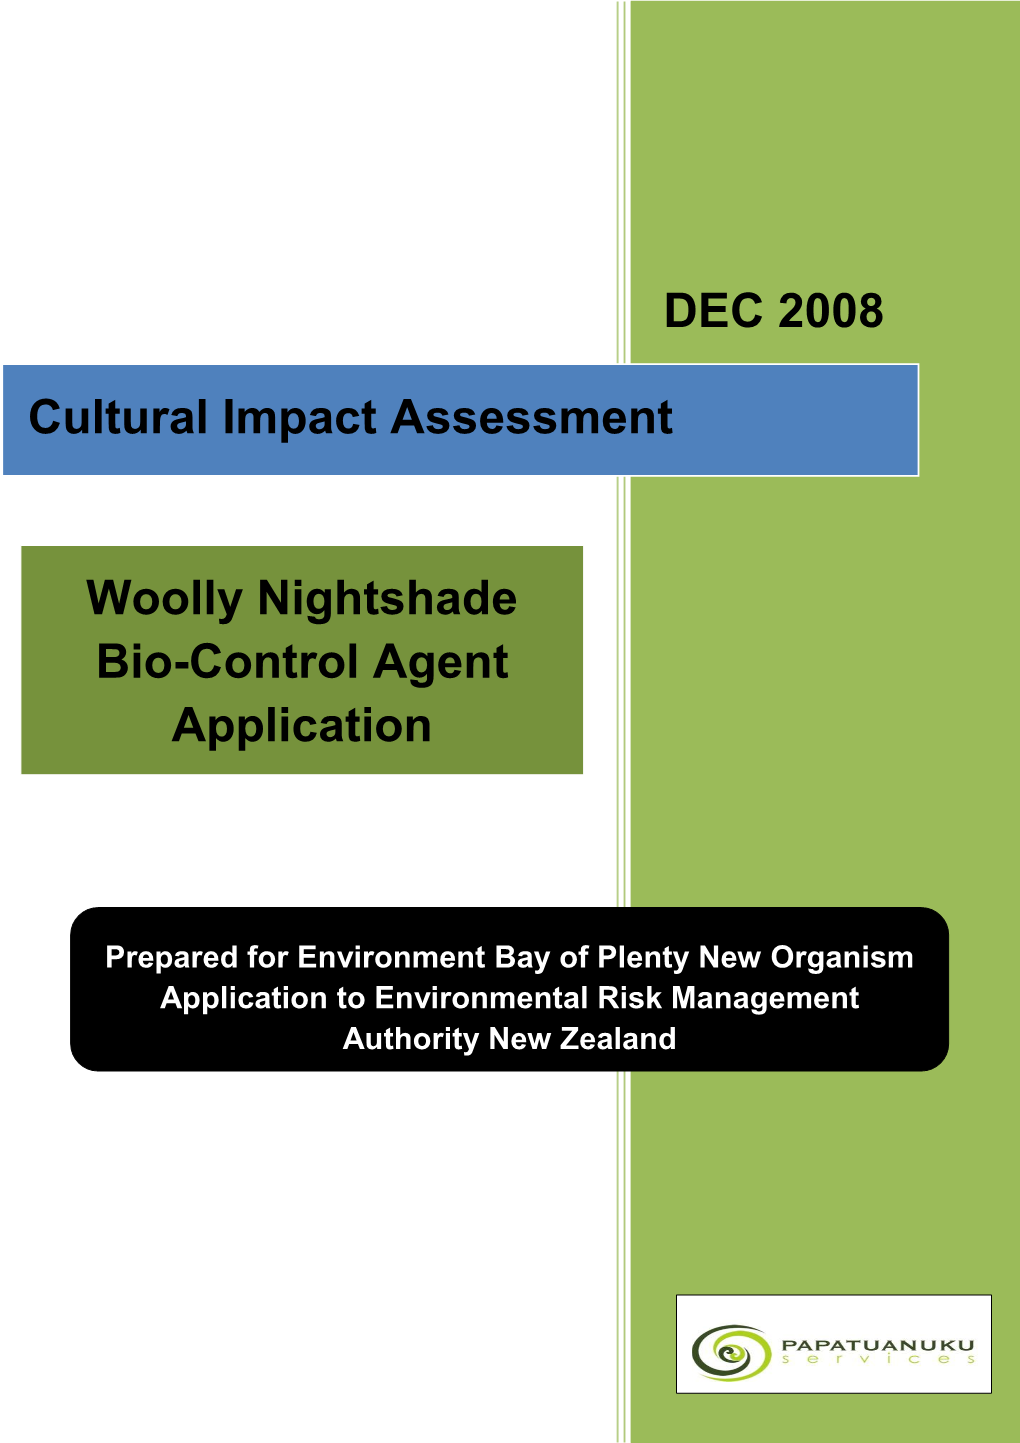 Woolly Nightshade Bio-Control Agent Application